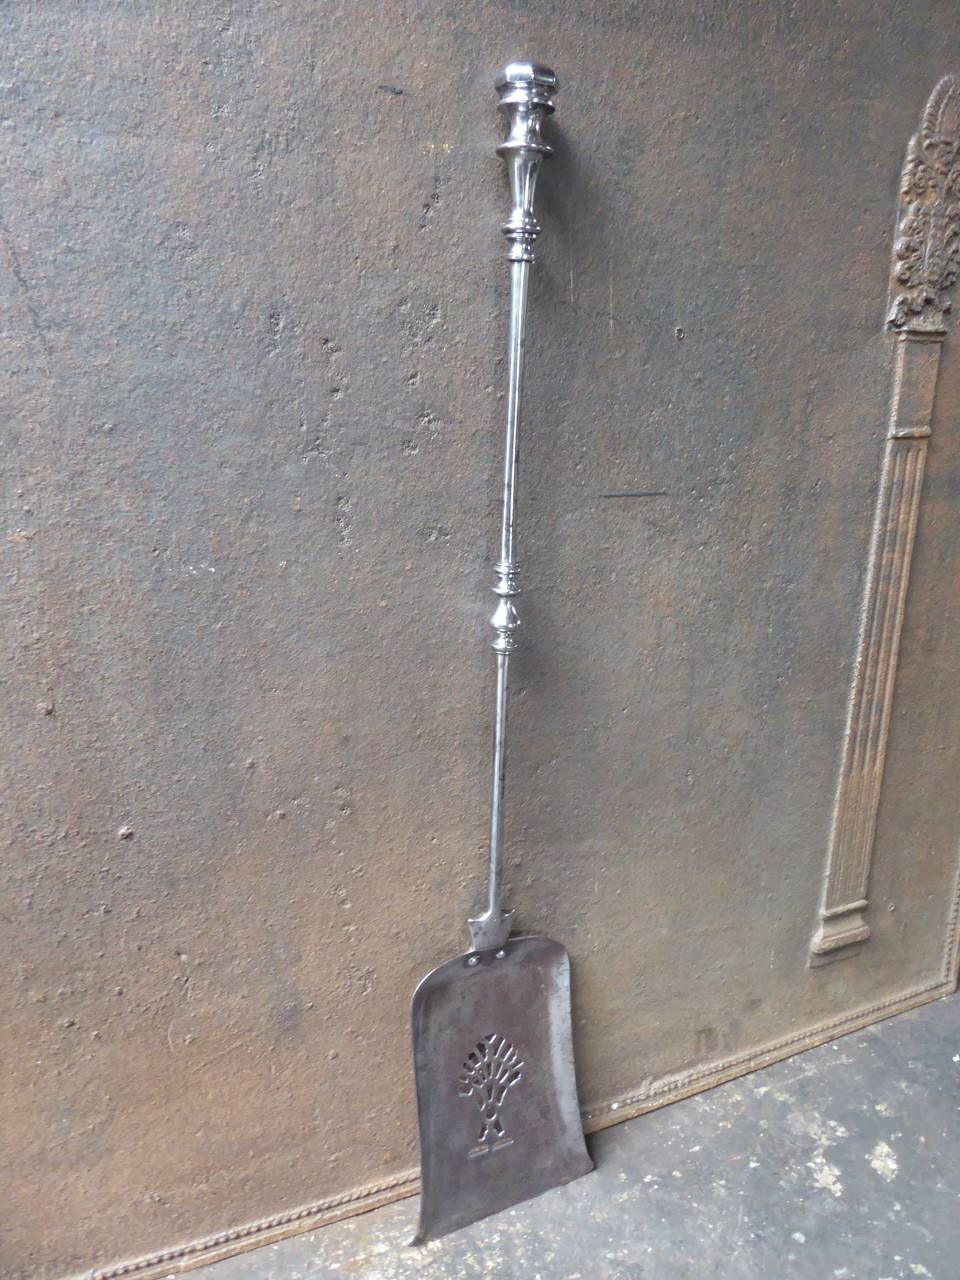 19th century English fireplace shovel made of polished steel.